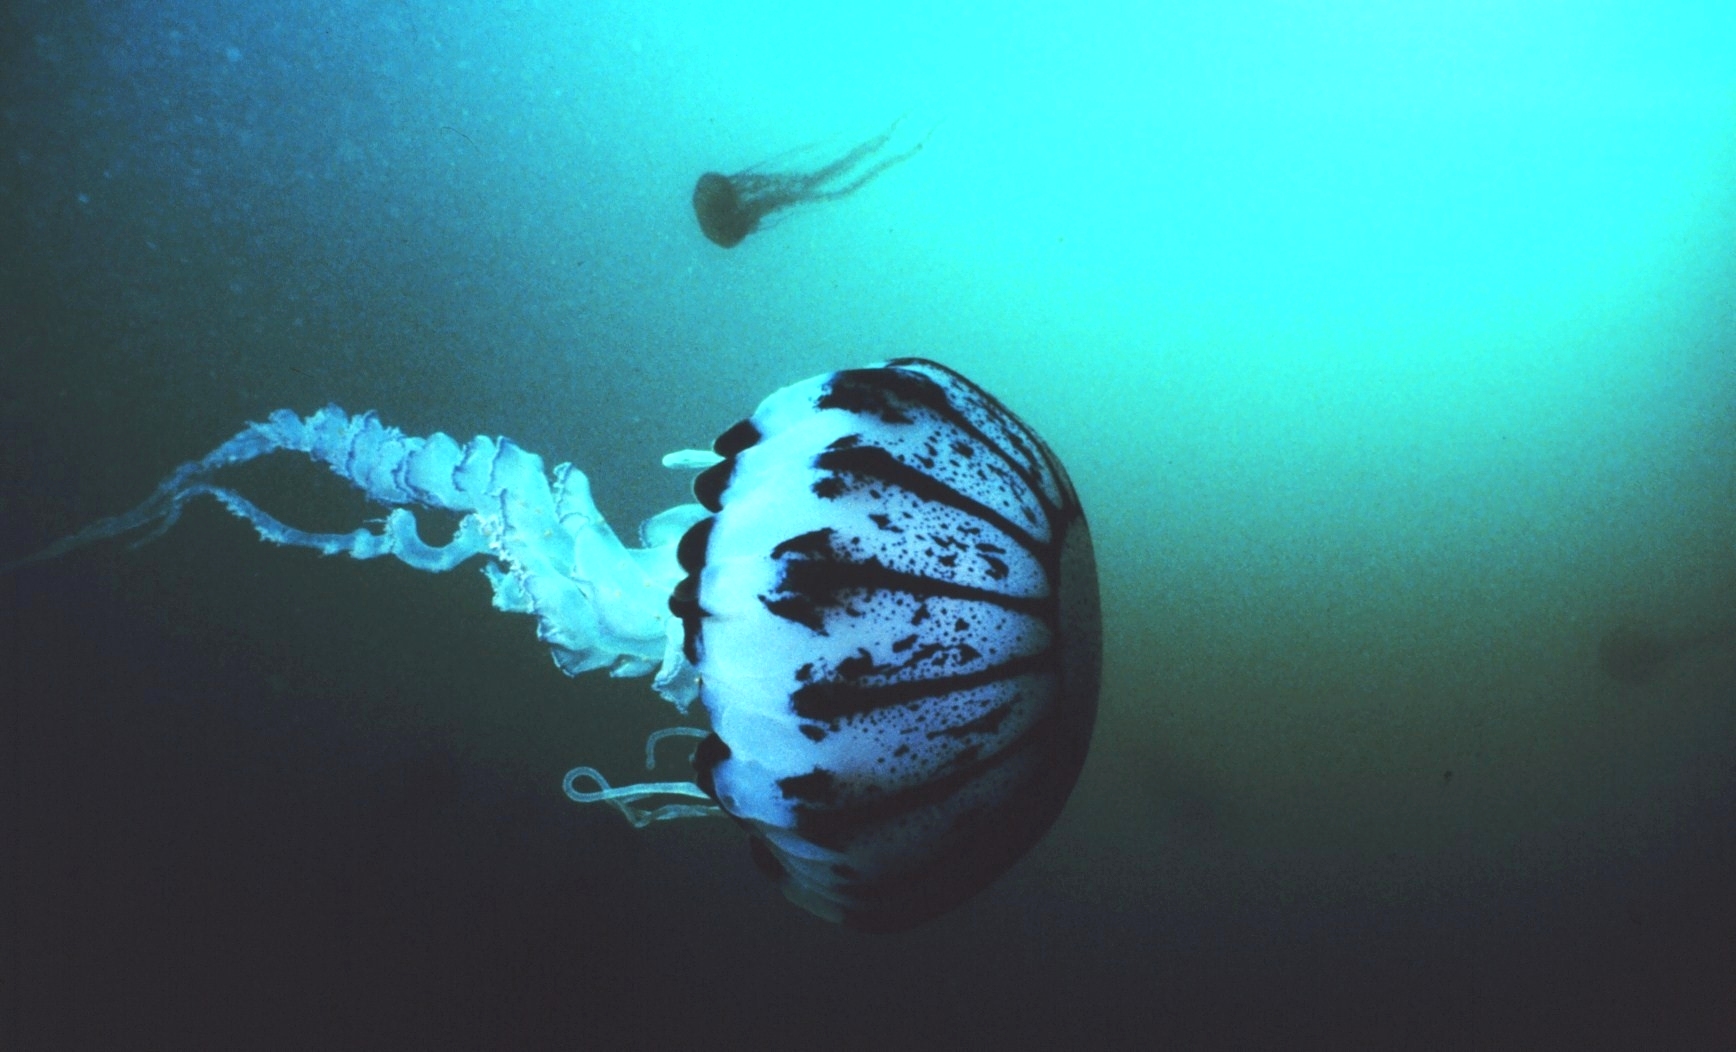 Jellyfish swimming in dark waters